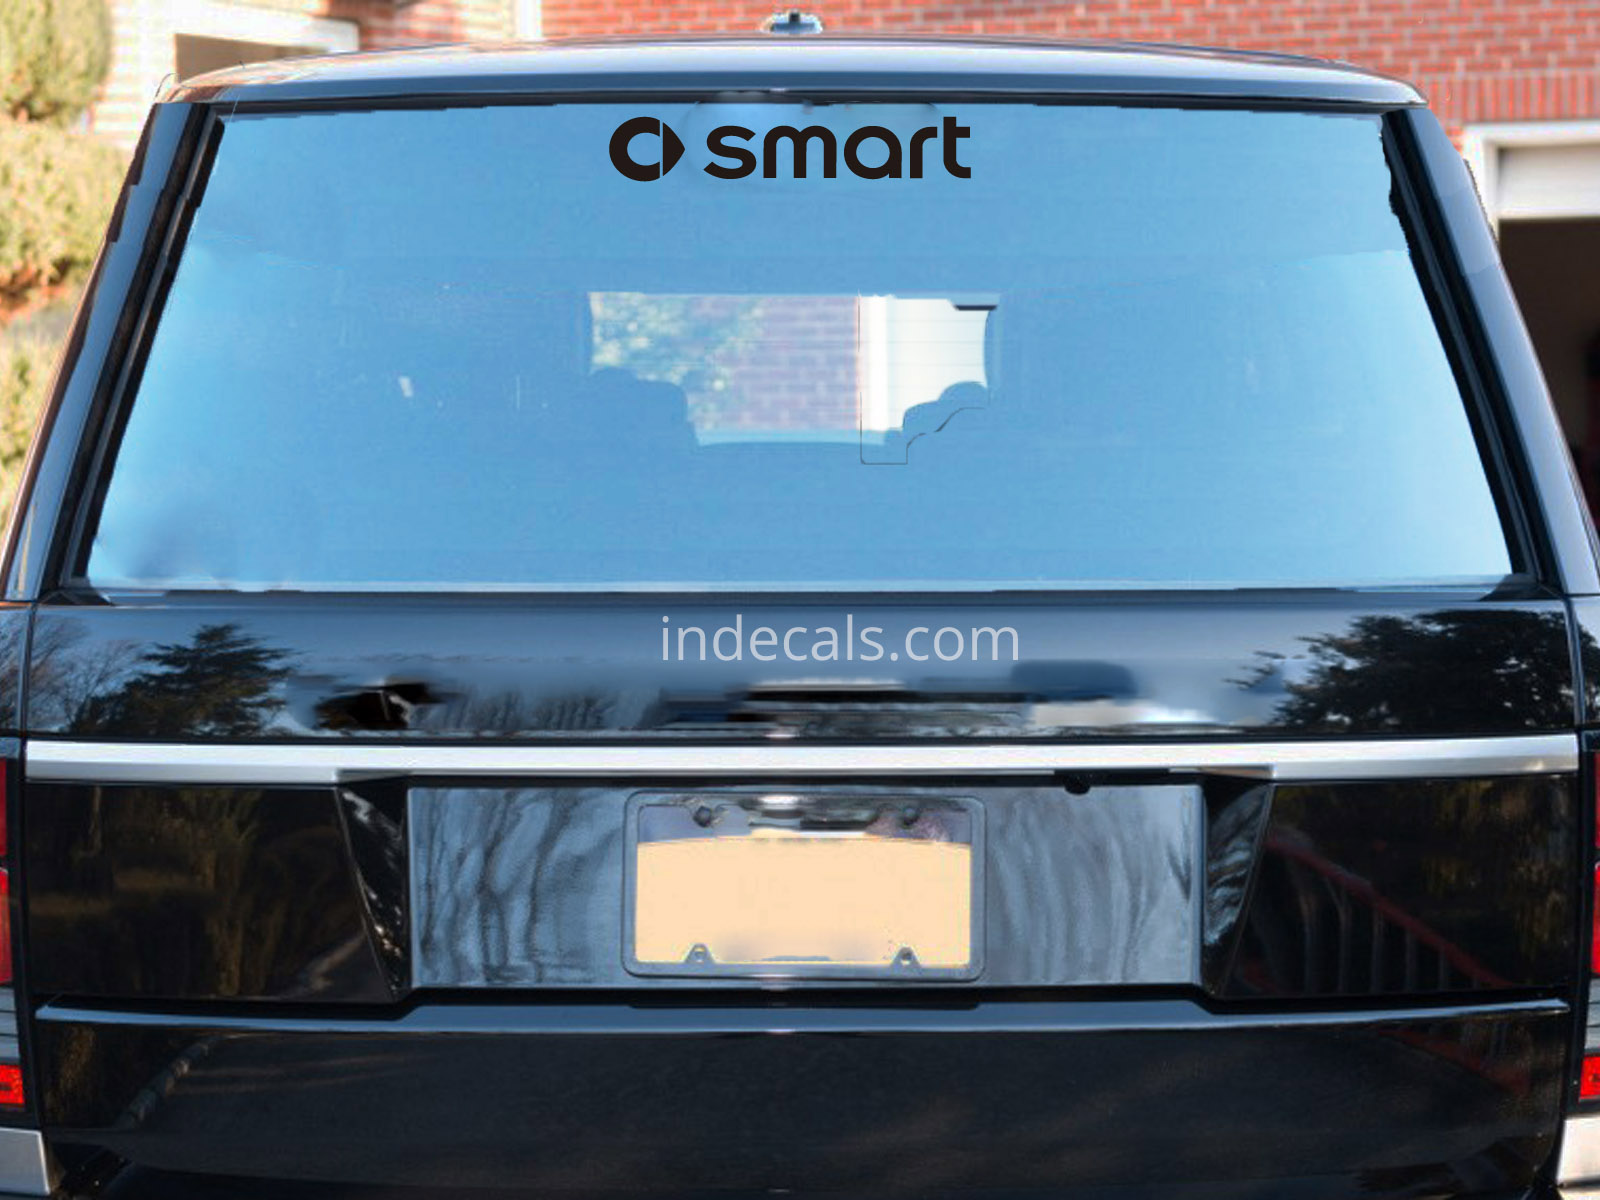 1 x Smart Sticker for Windshield or Back Window - Black